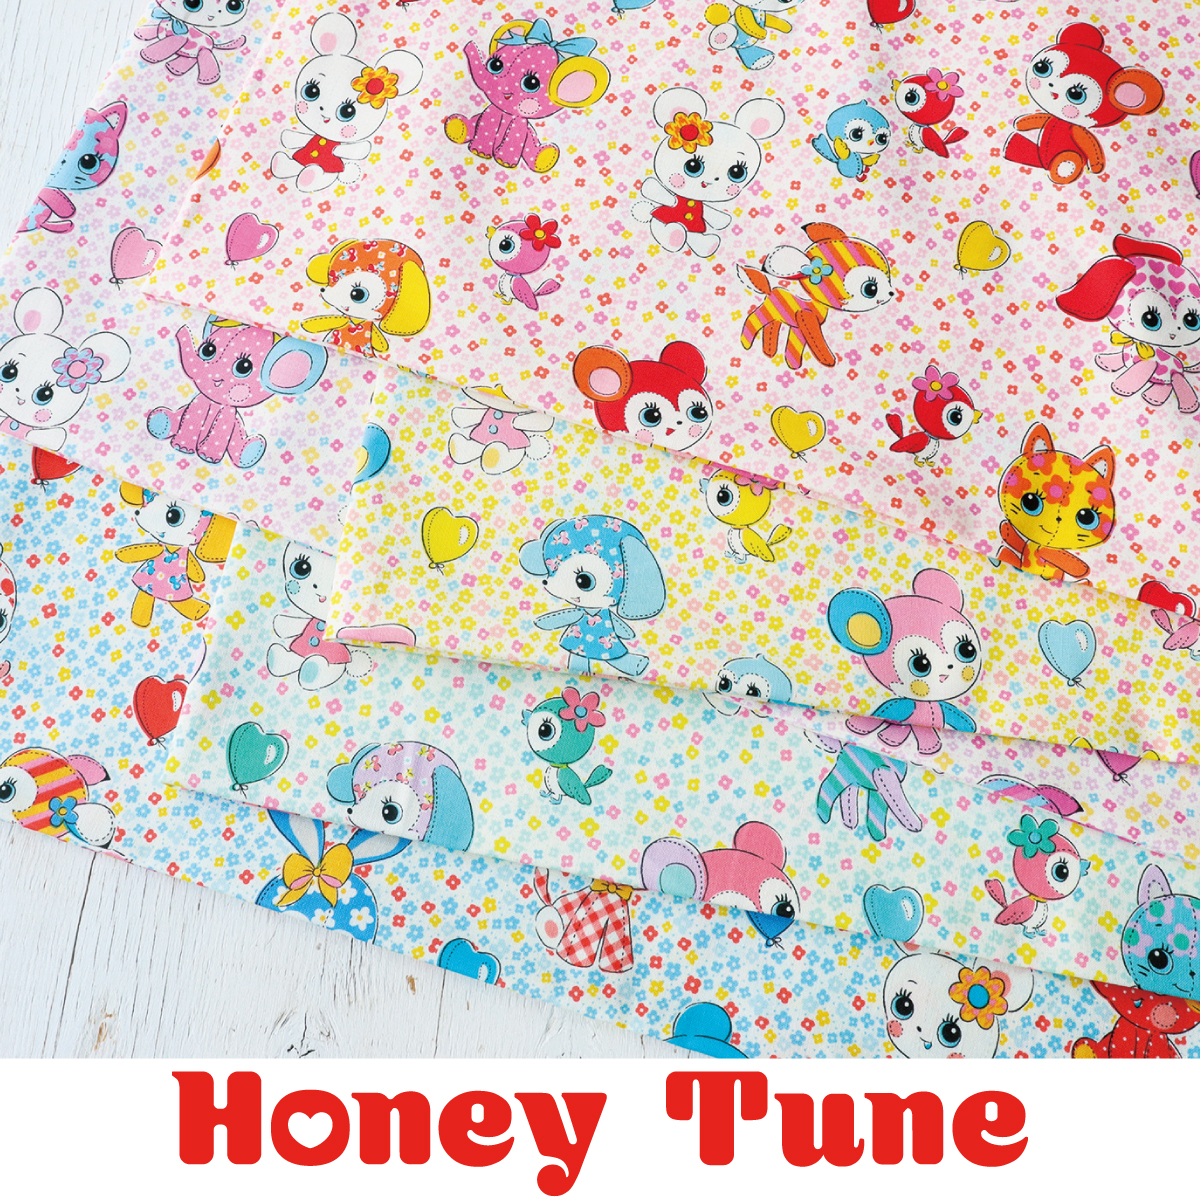 ■HT30000R-2 Honey Tune 2021 ハニーチューン「ぬいぐるみチューン」 原反約12m (巻)